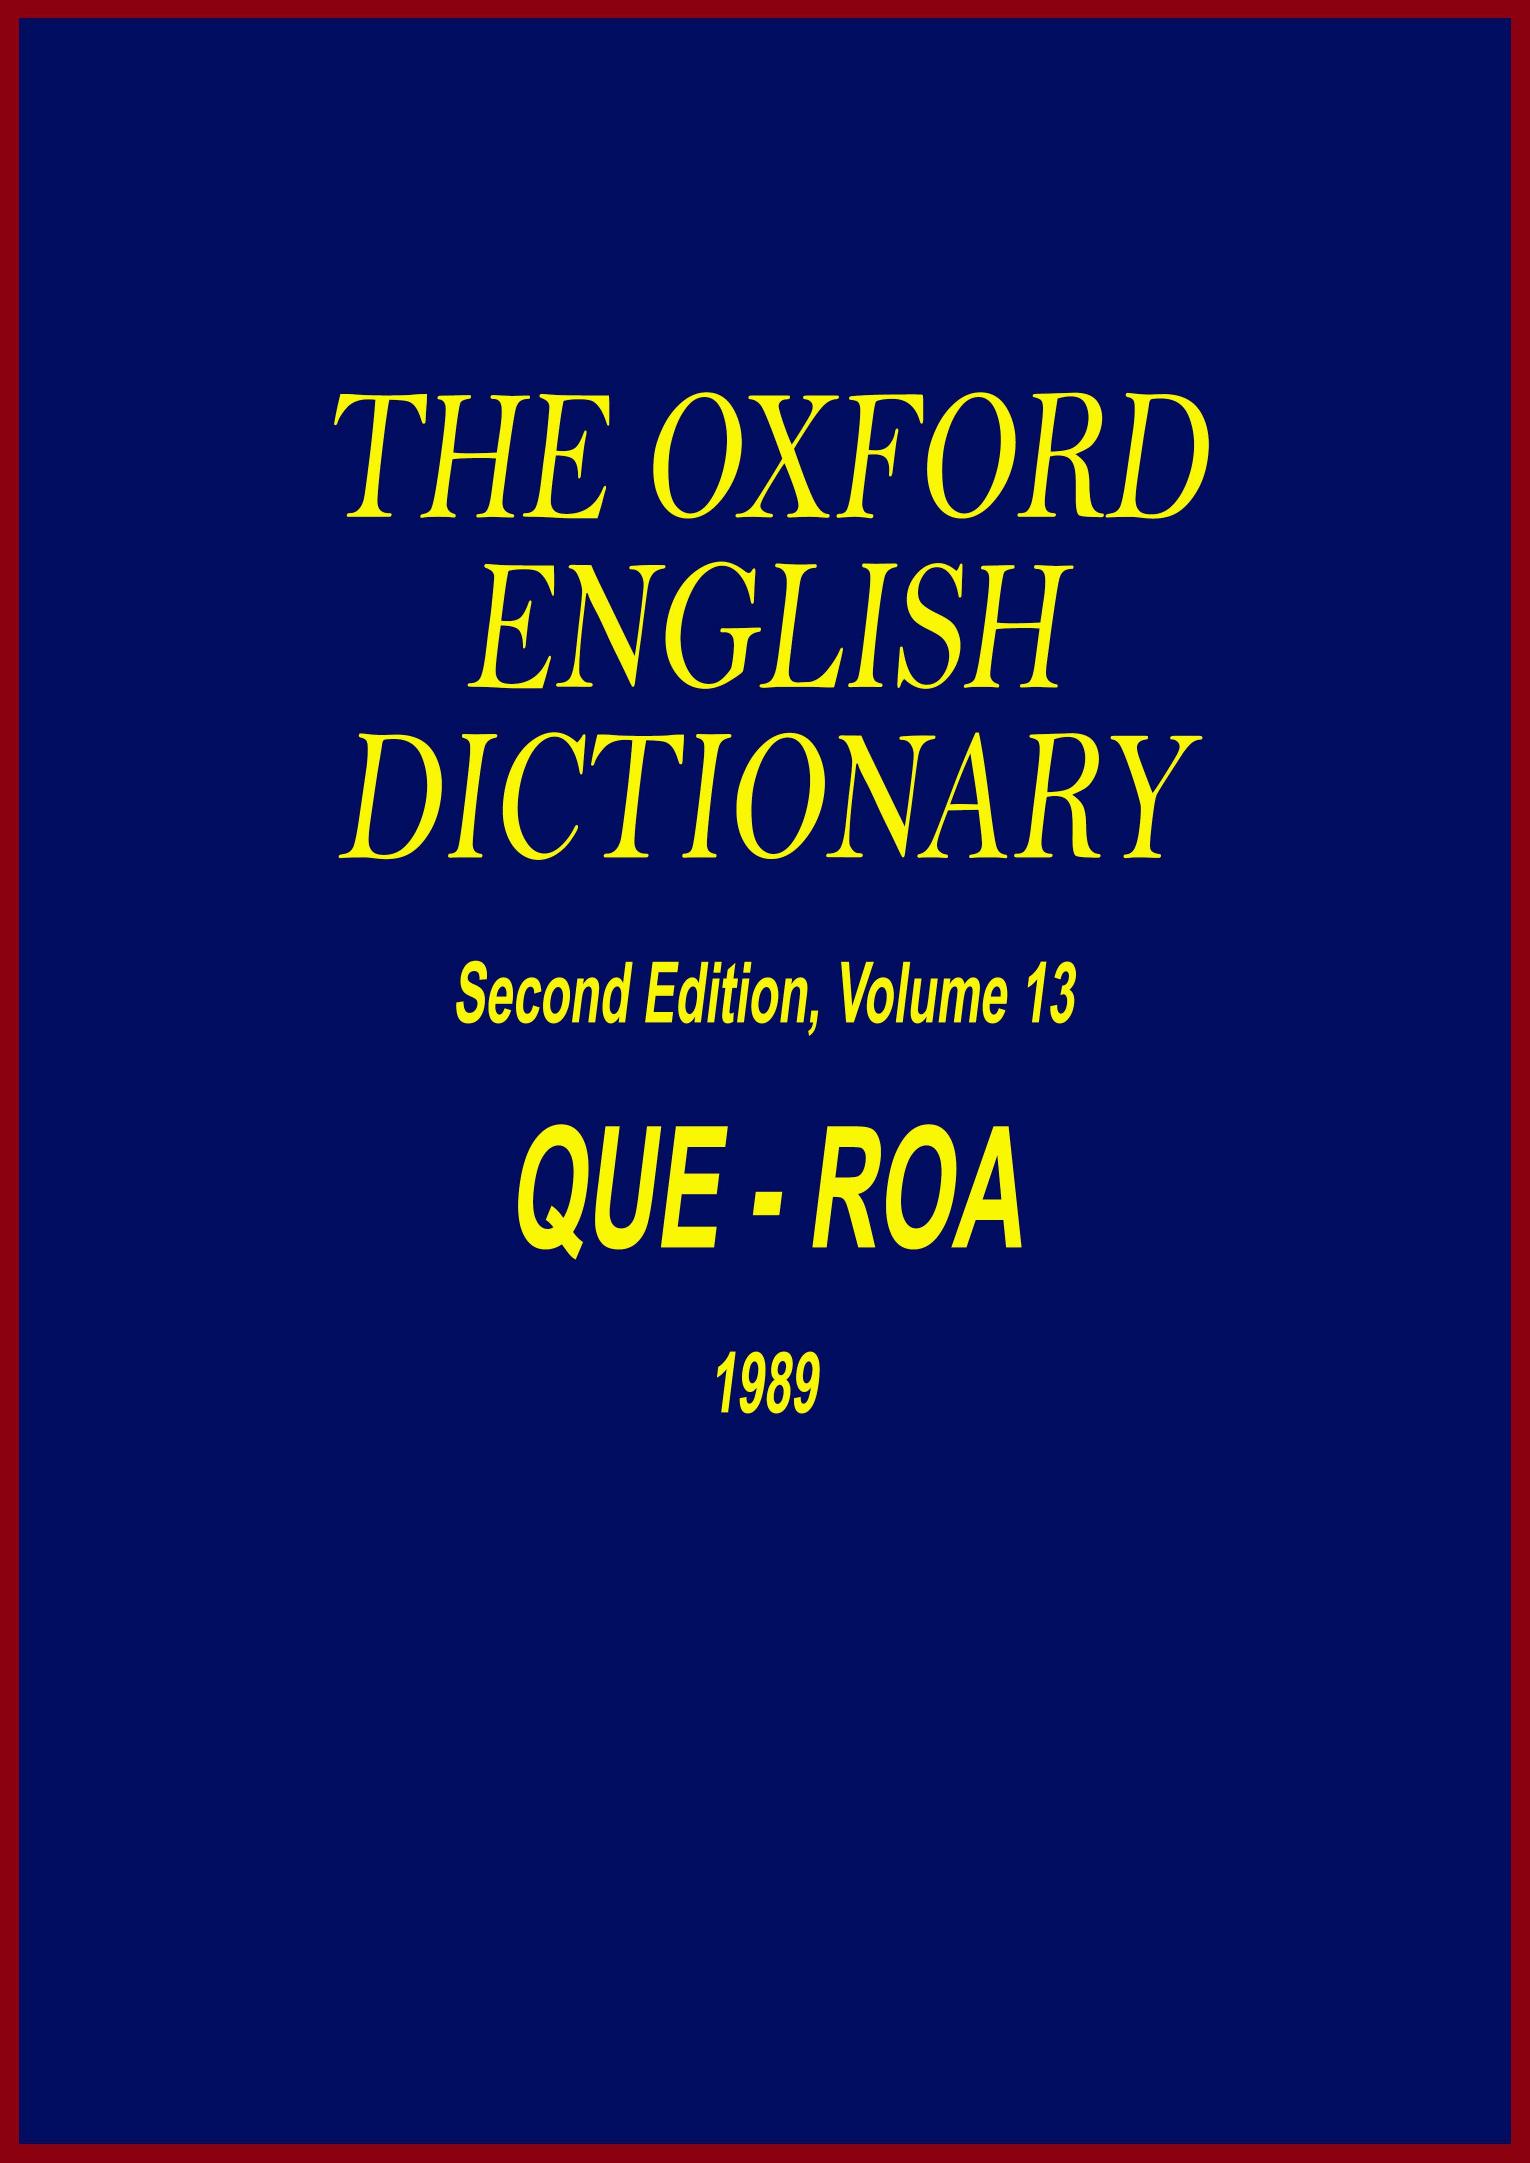 The Oxford English Dictionary - QUE-ROA